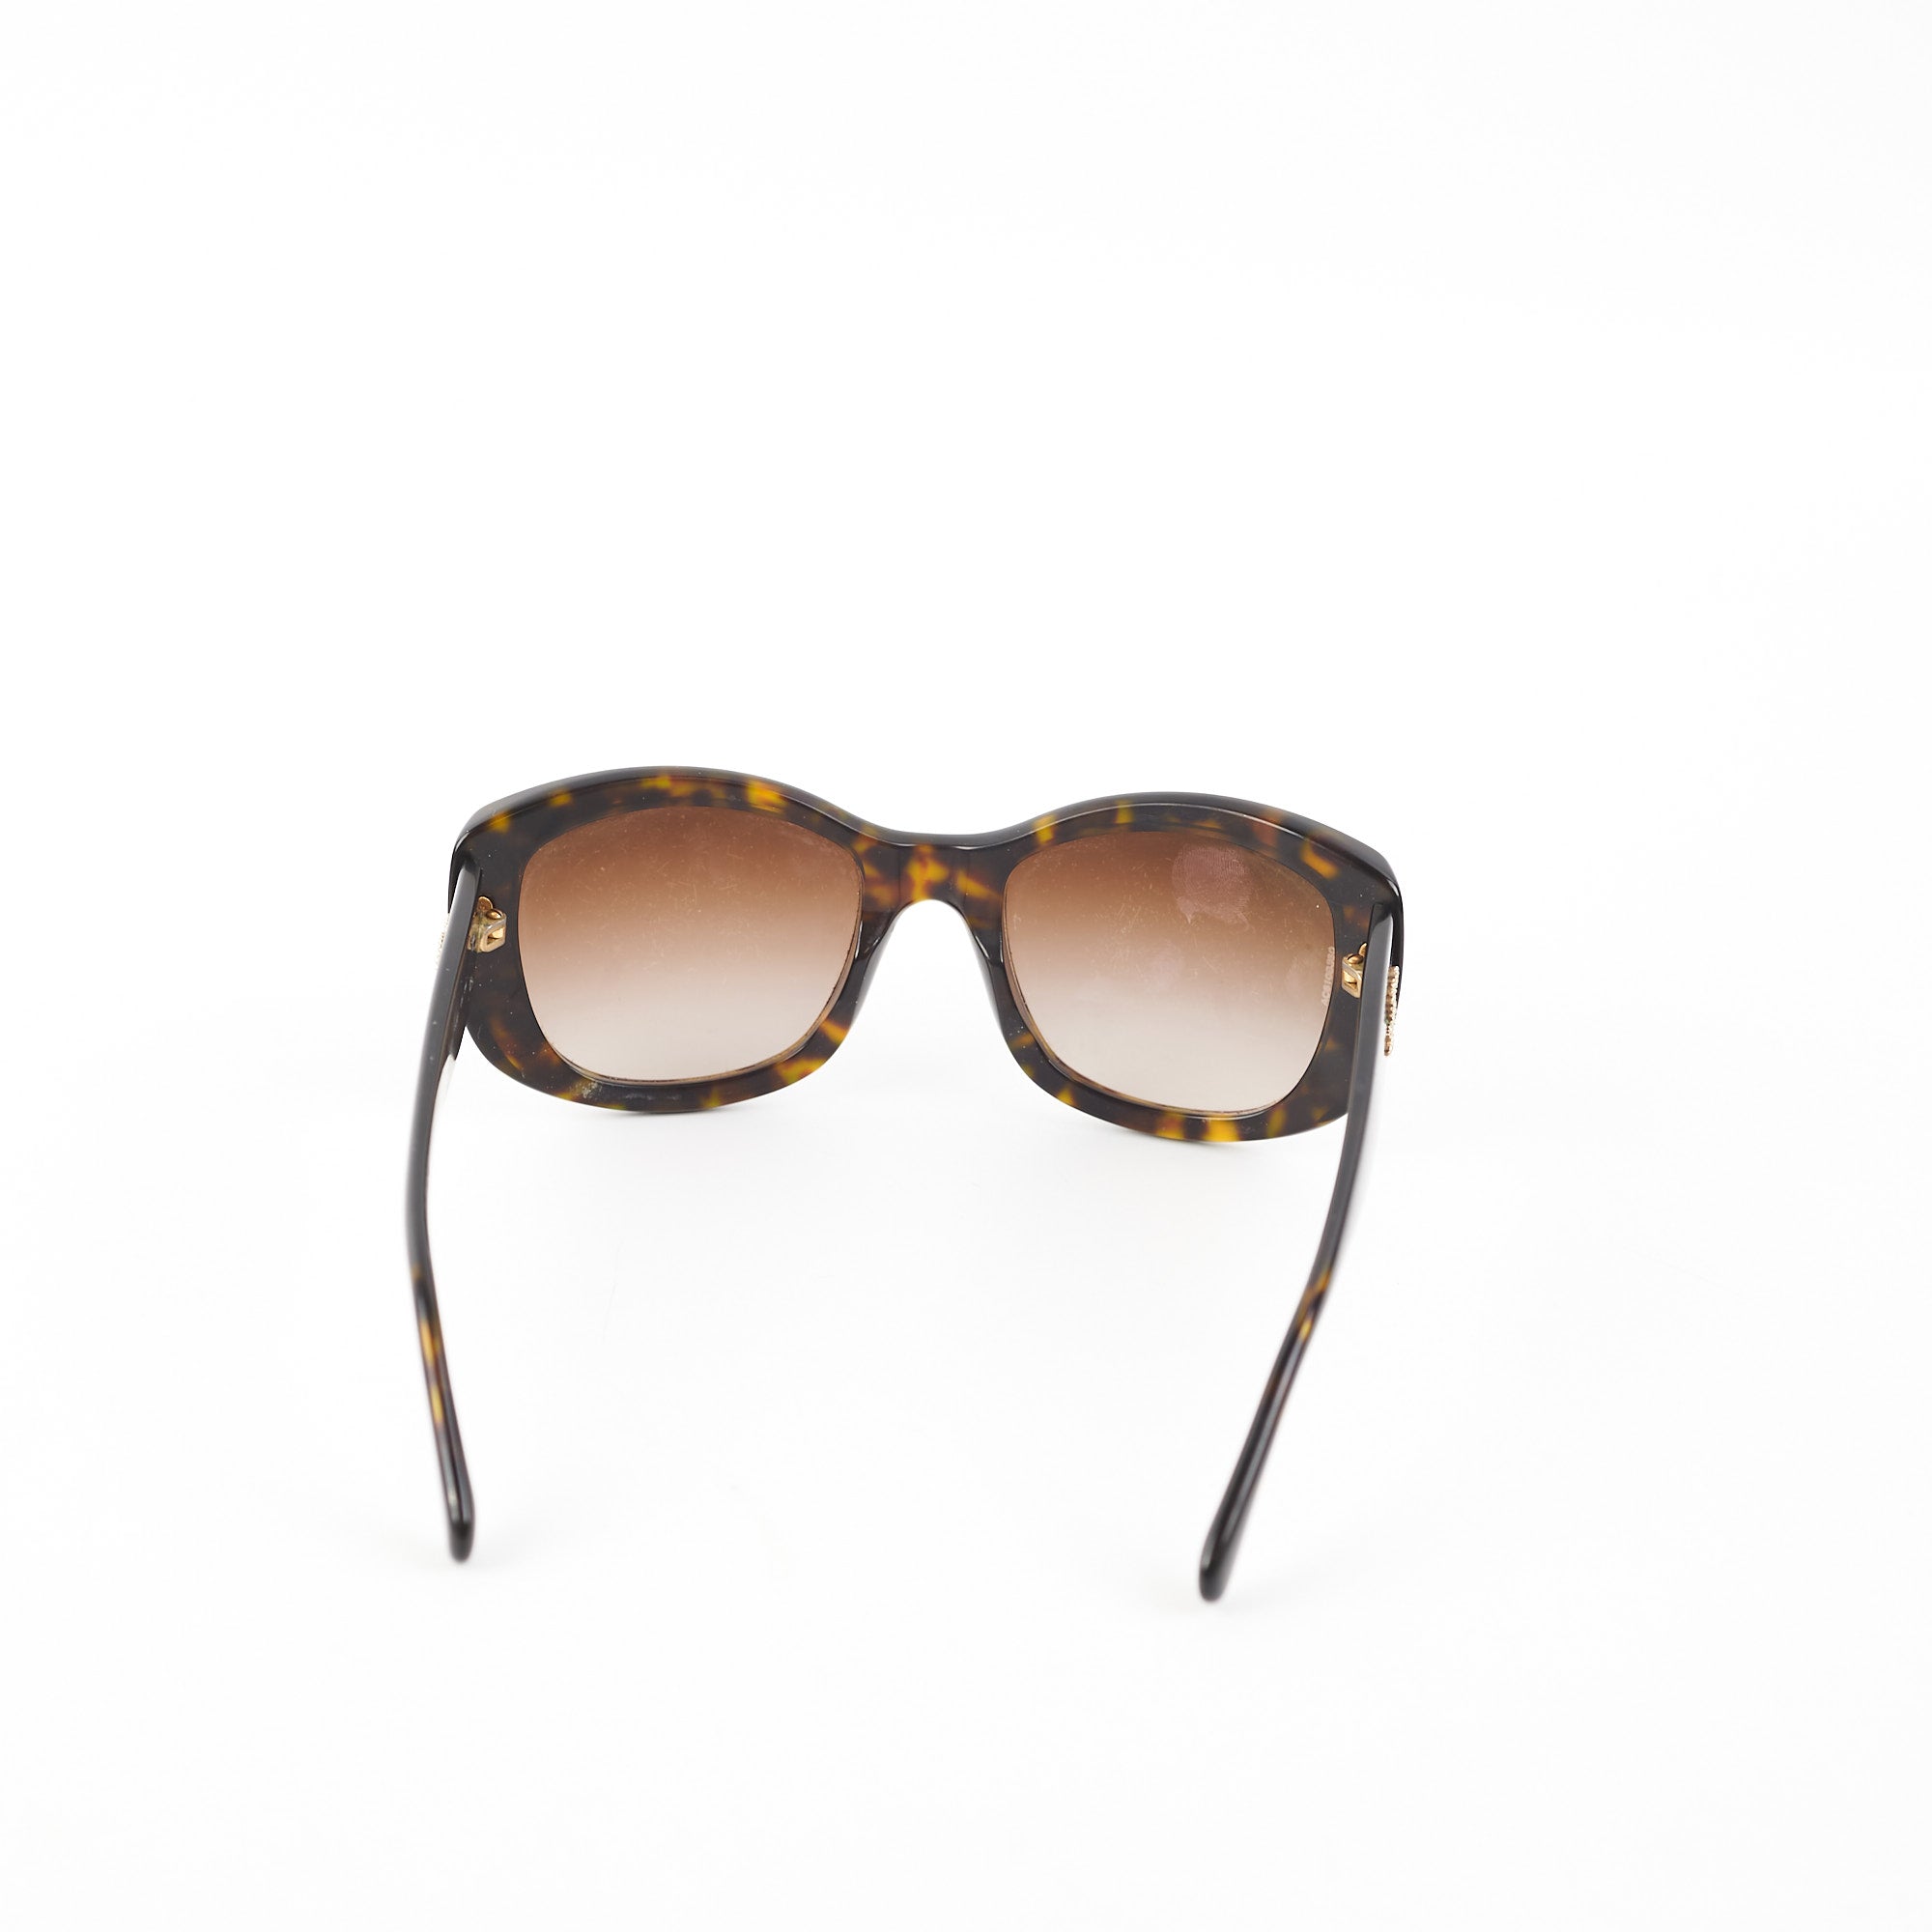 Chanel Tortoise Sunglasses - THE PURSE AFFAIR